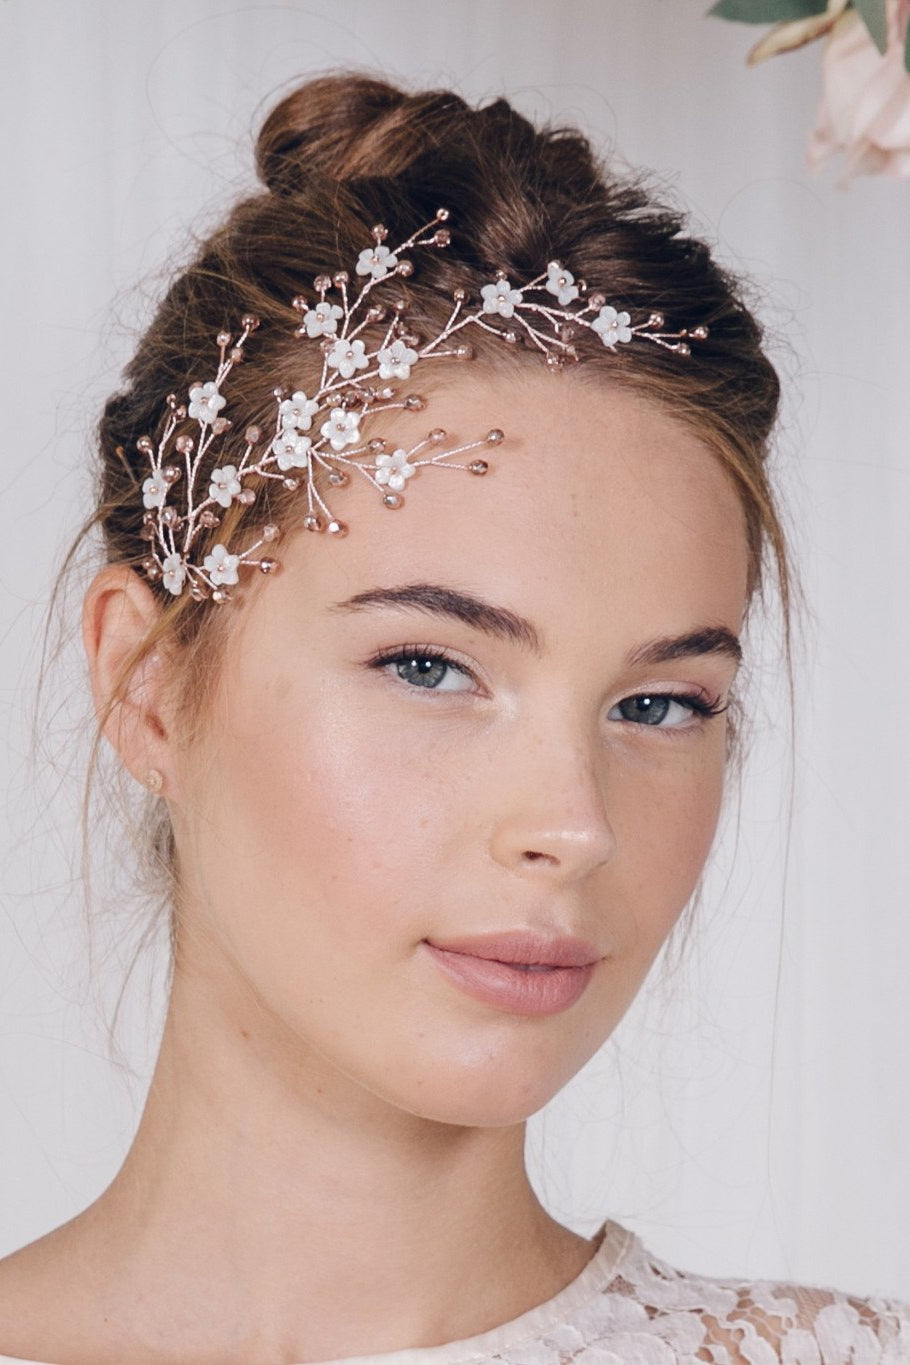 Cherry blossom wedding hair accessory - Cherry - Debbie Carlisle